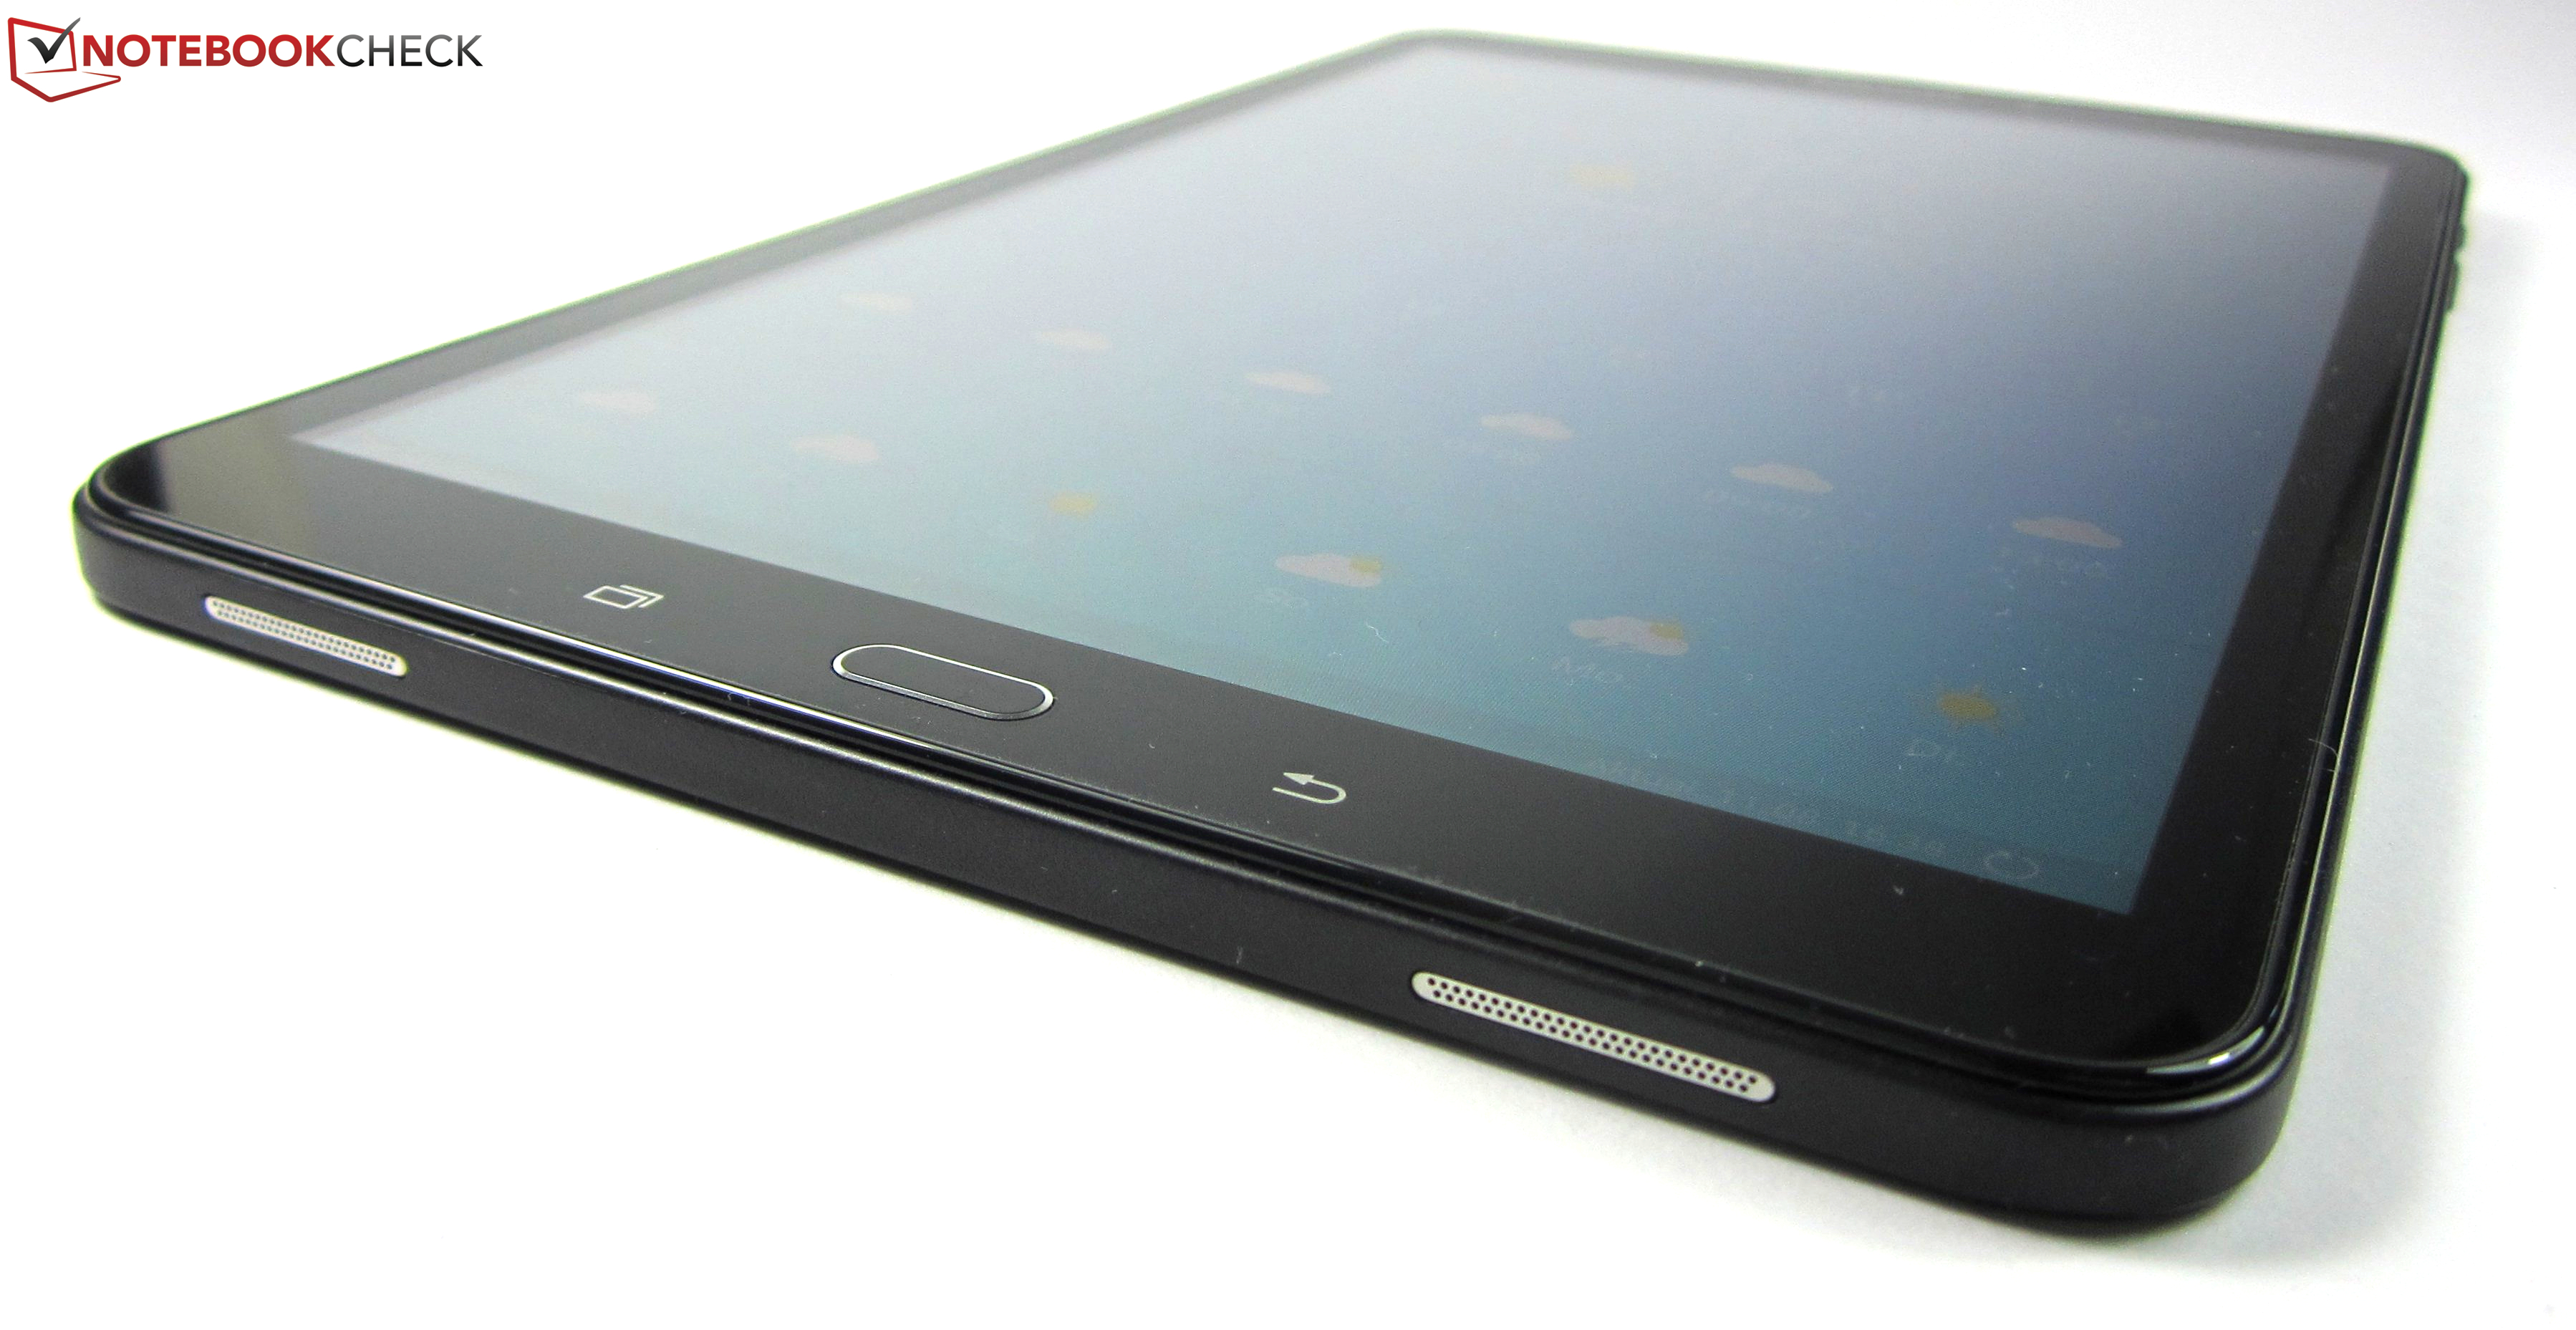 Kleren havik bende Samsung Galaxy Tab A 10.1 (2016) Tablet Review - NotebookCheck.net Reviews